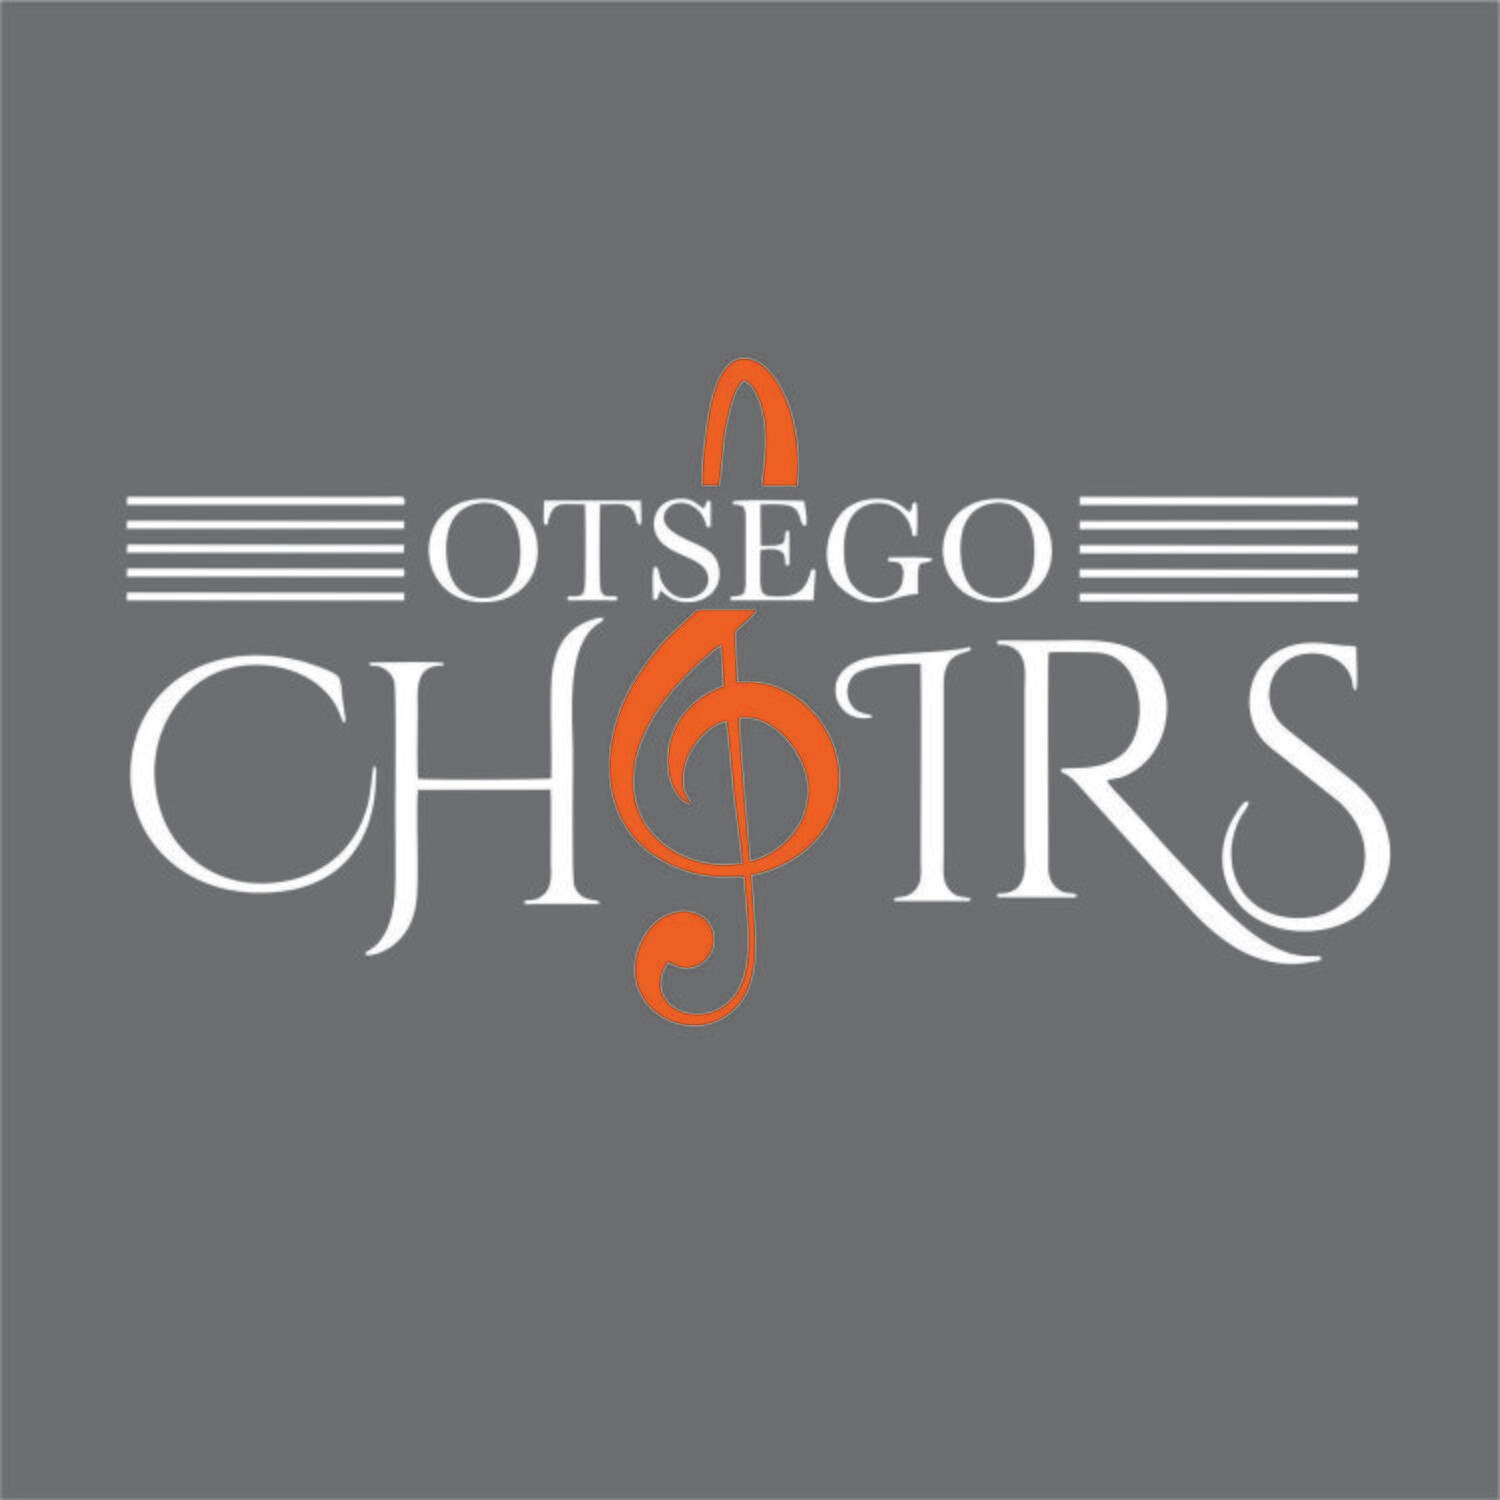 Otsego- CHOIR Charcoal Screen Printed Apparel